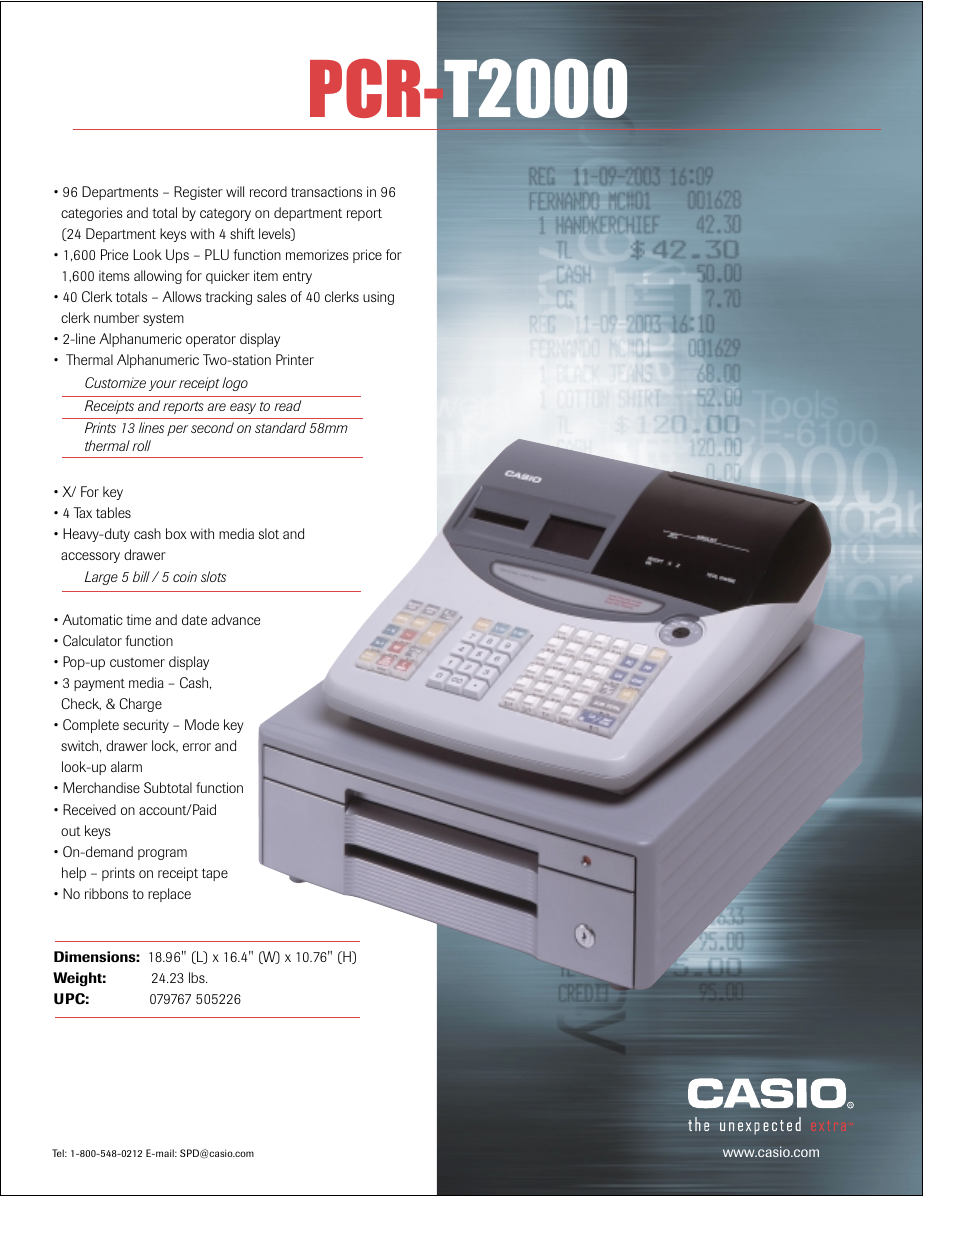 Casio PCR-T2000 User Manual | 1 page